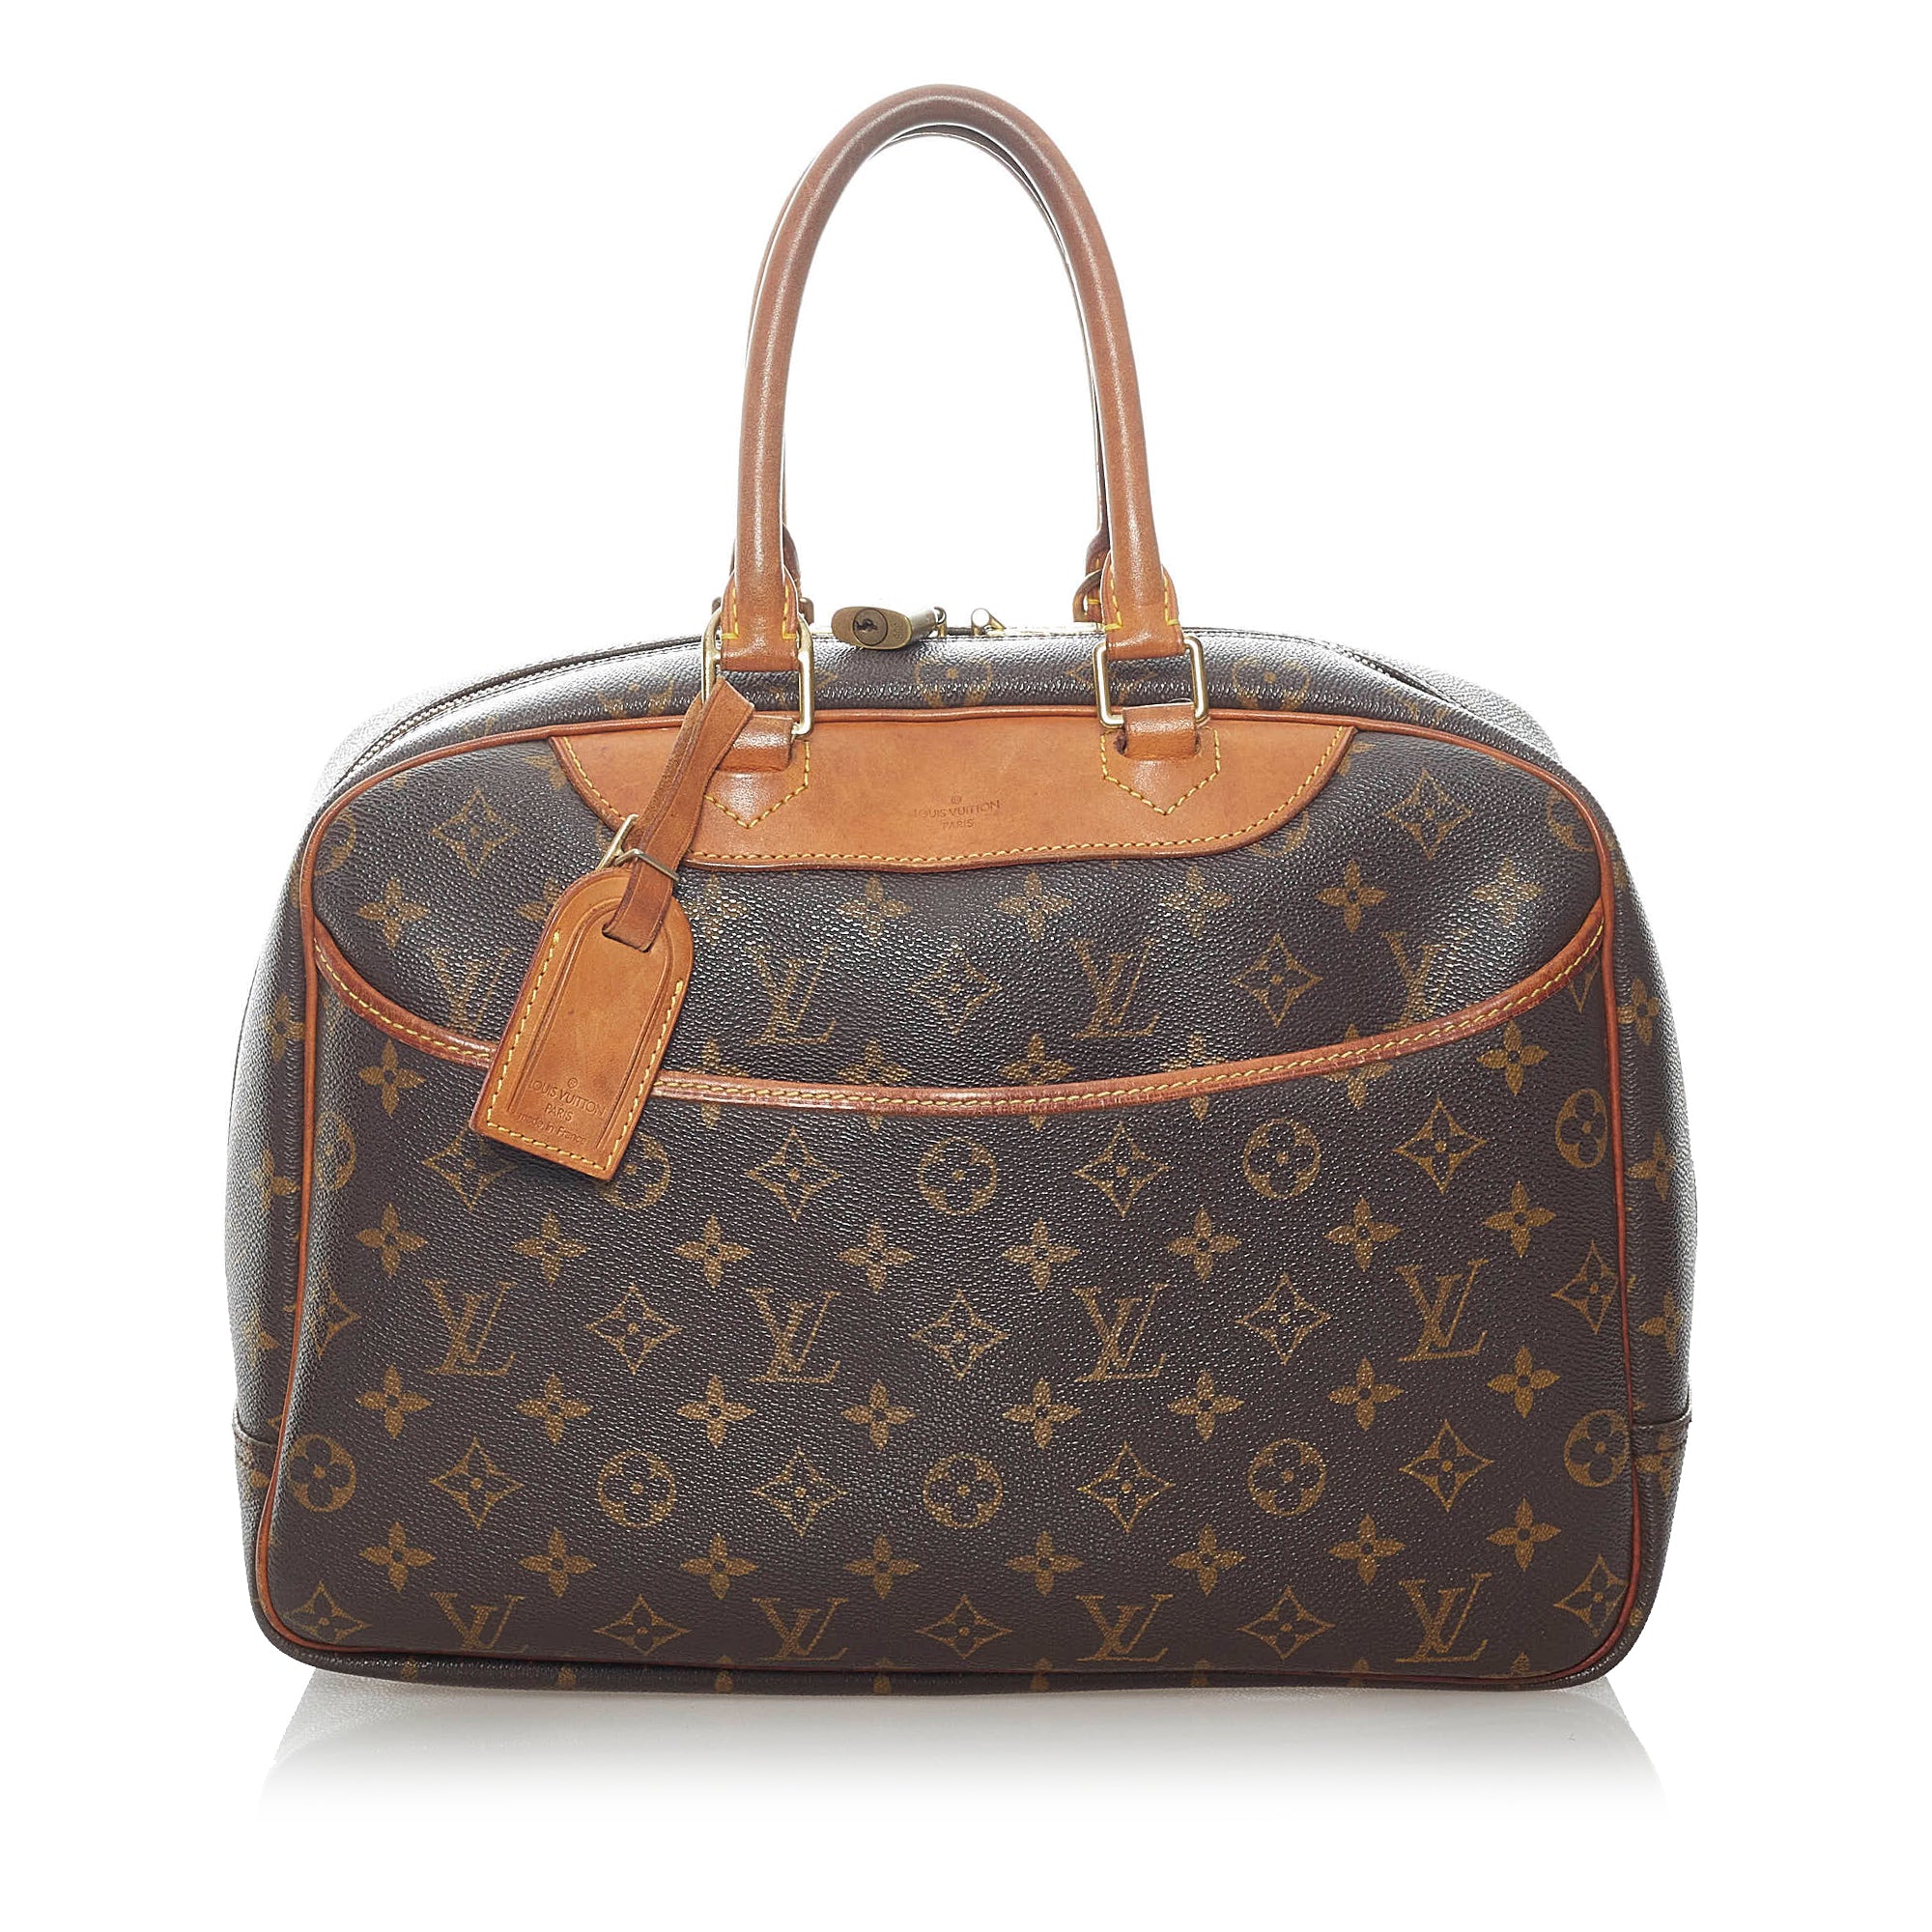 Louis Vuitton Brown Silk Confidential Bandeau Scarf - Luxury Resale CA